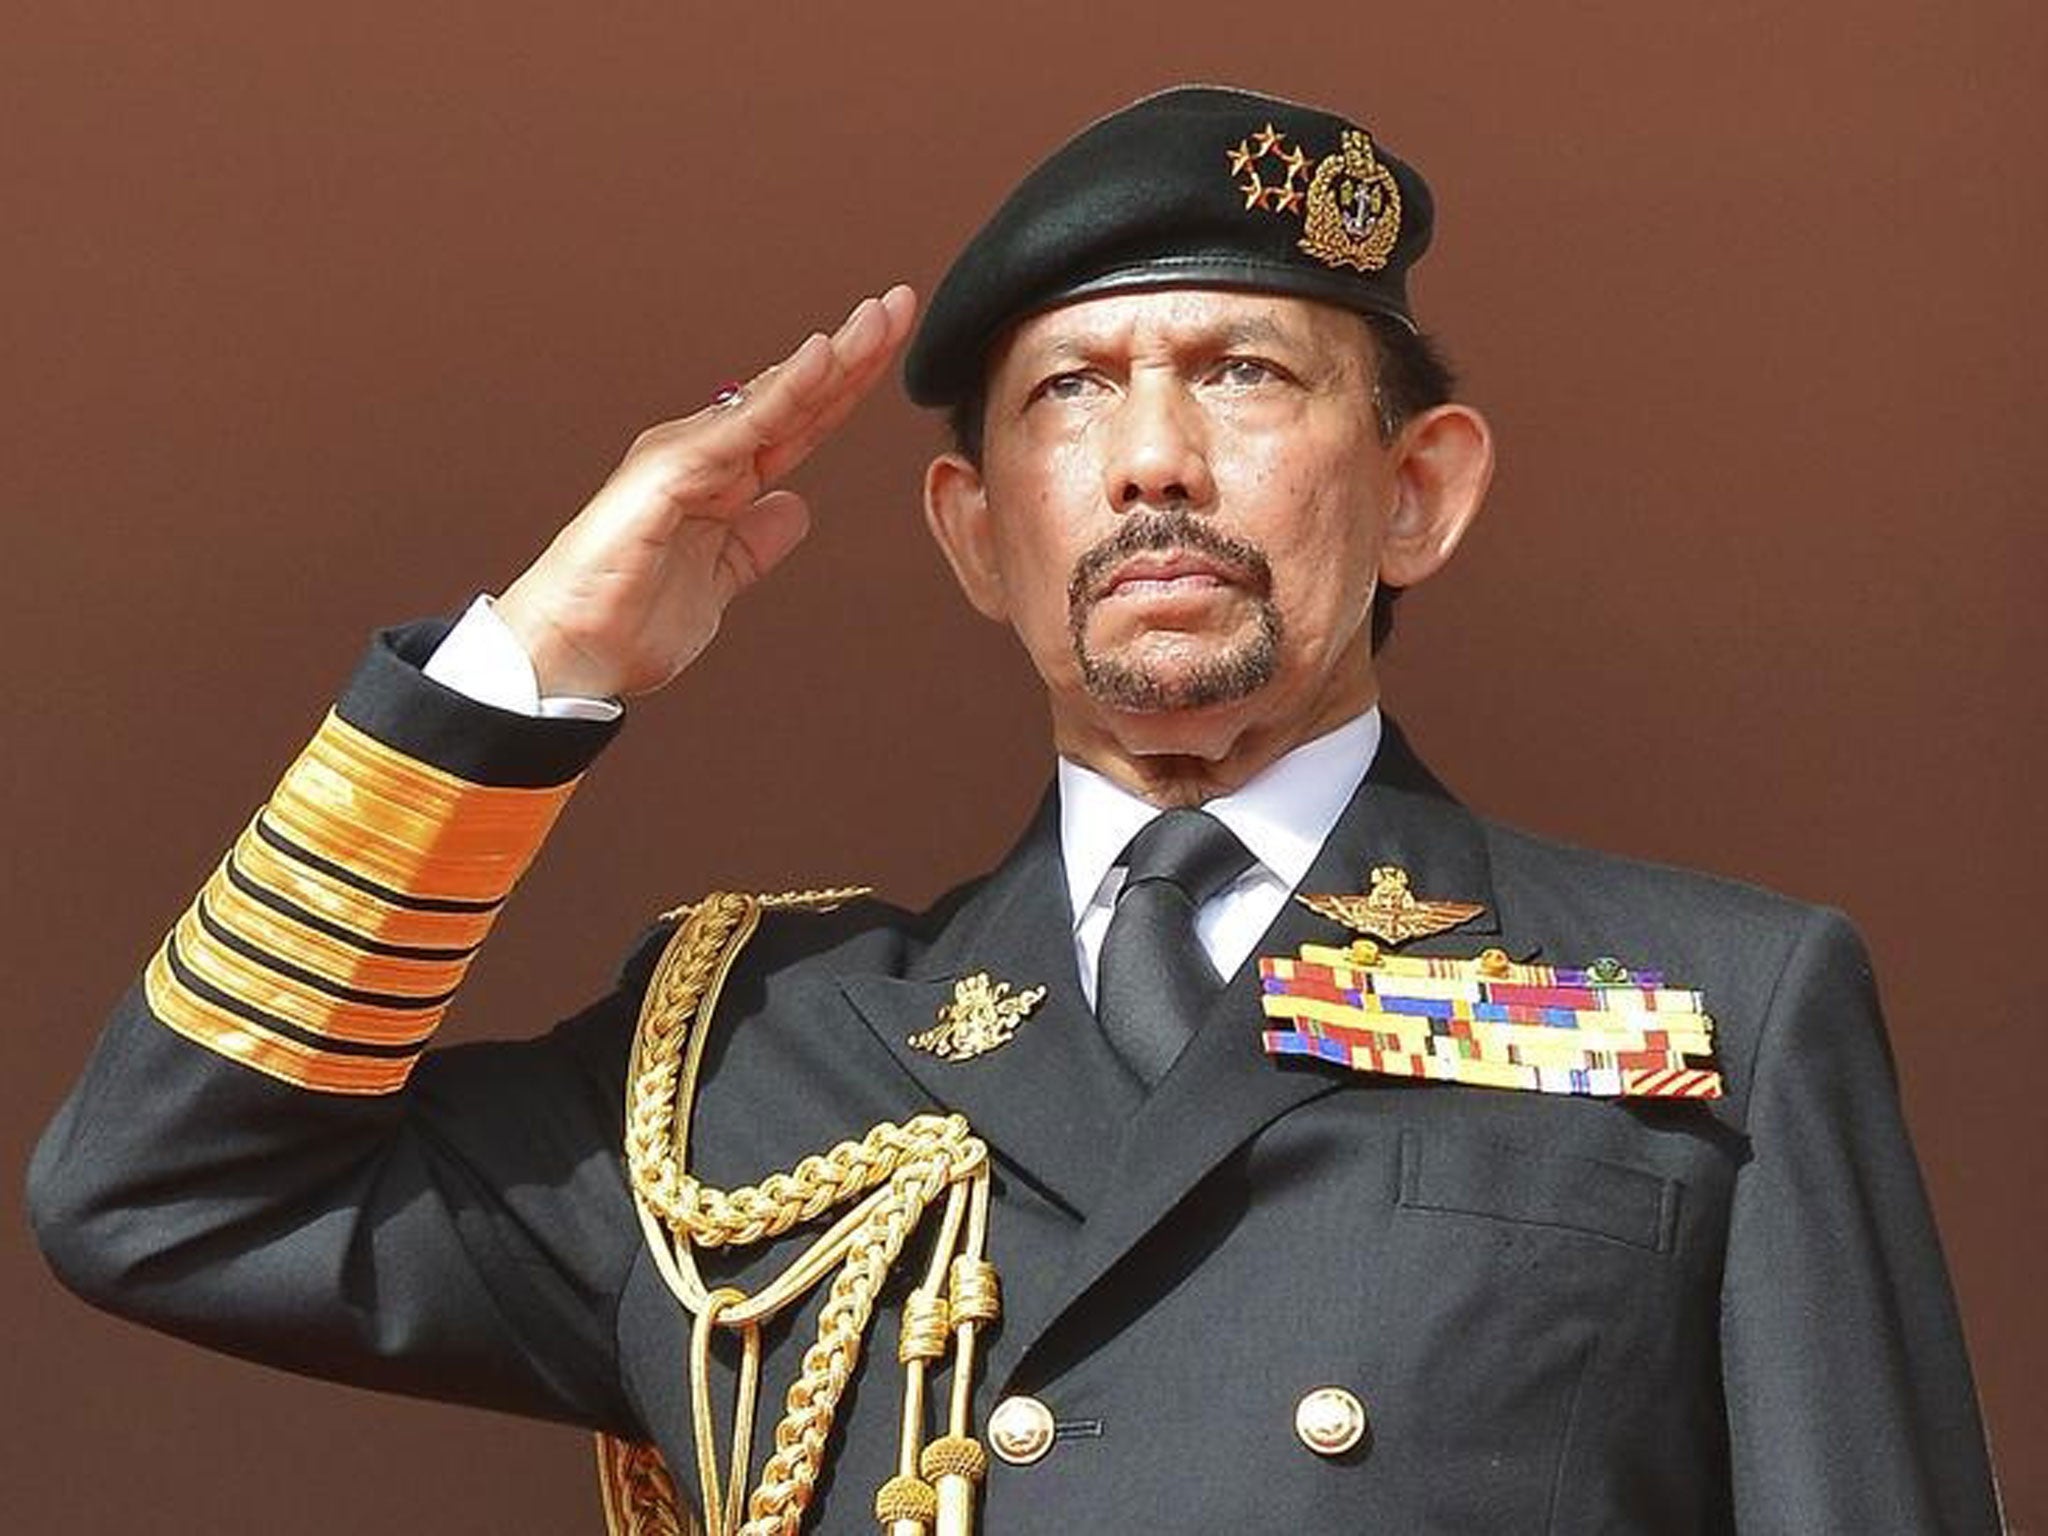 The Sultan of Brunei